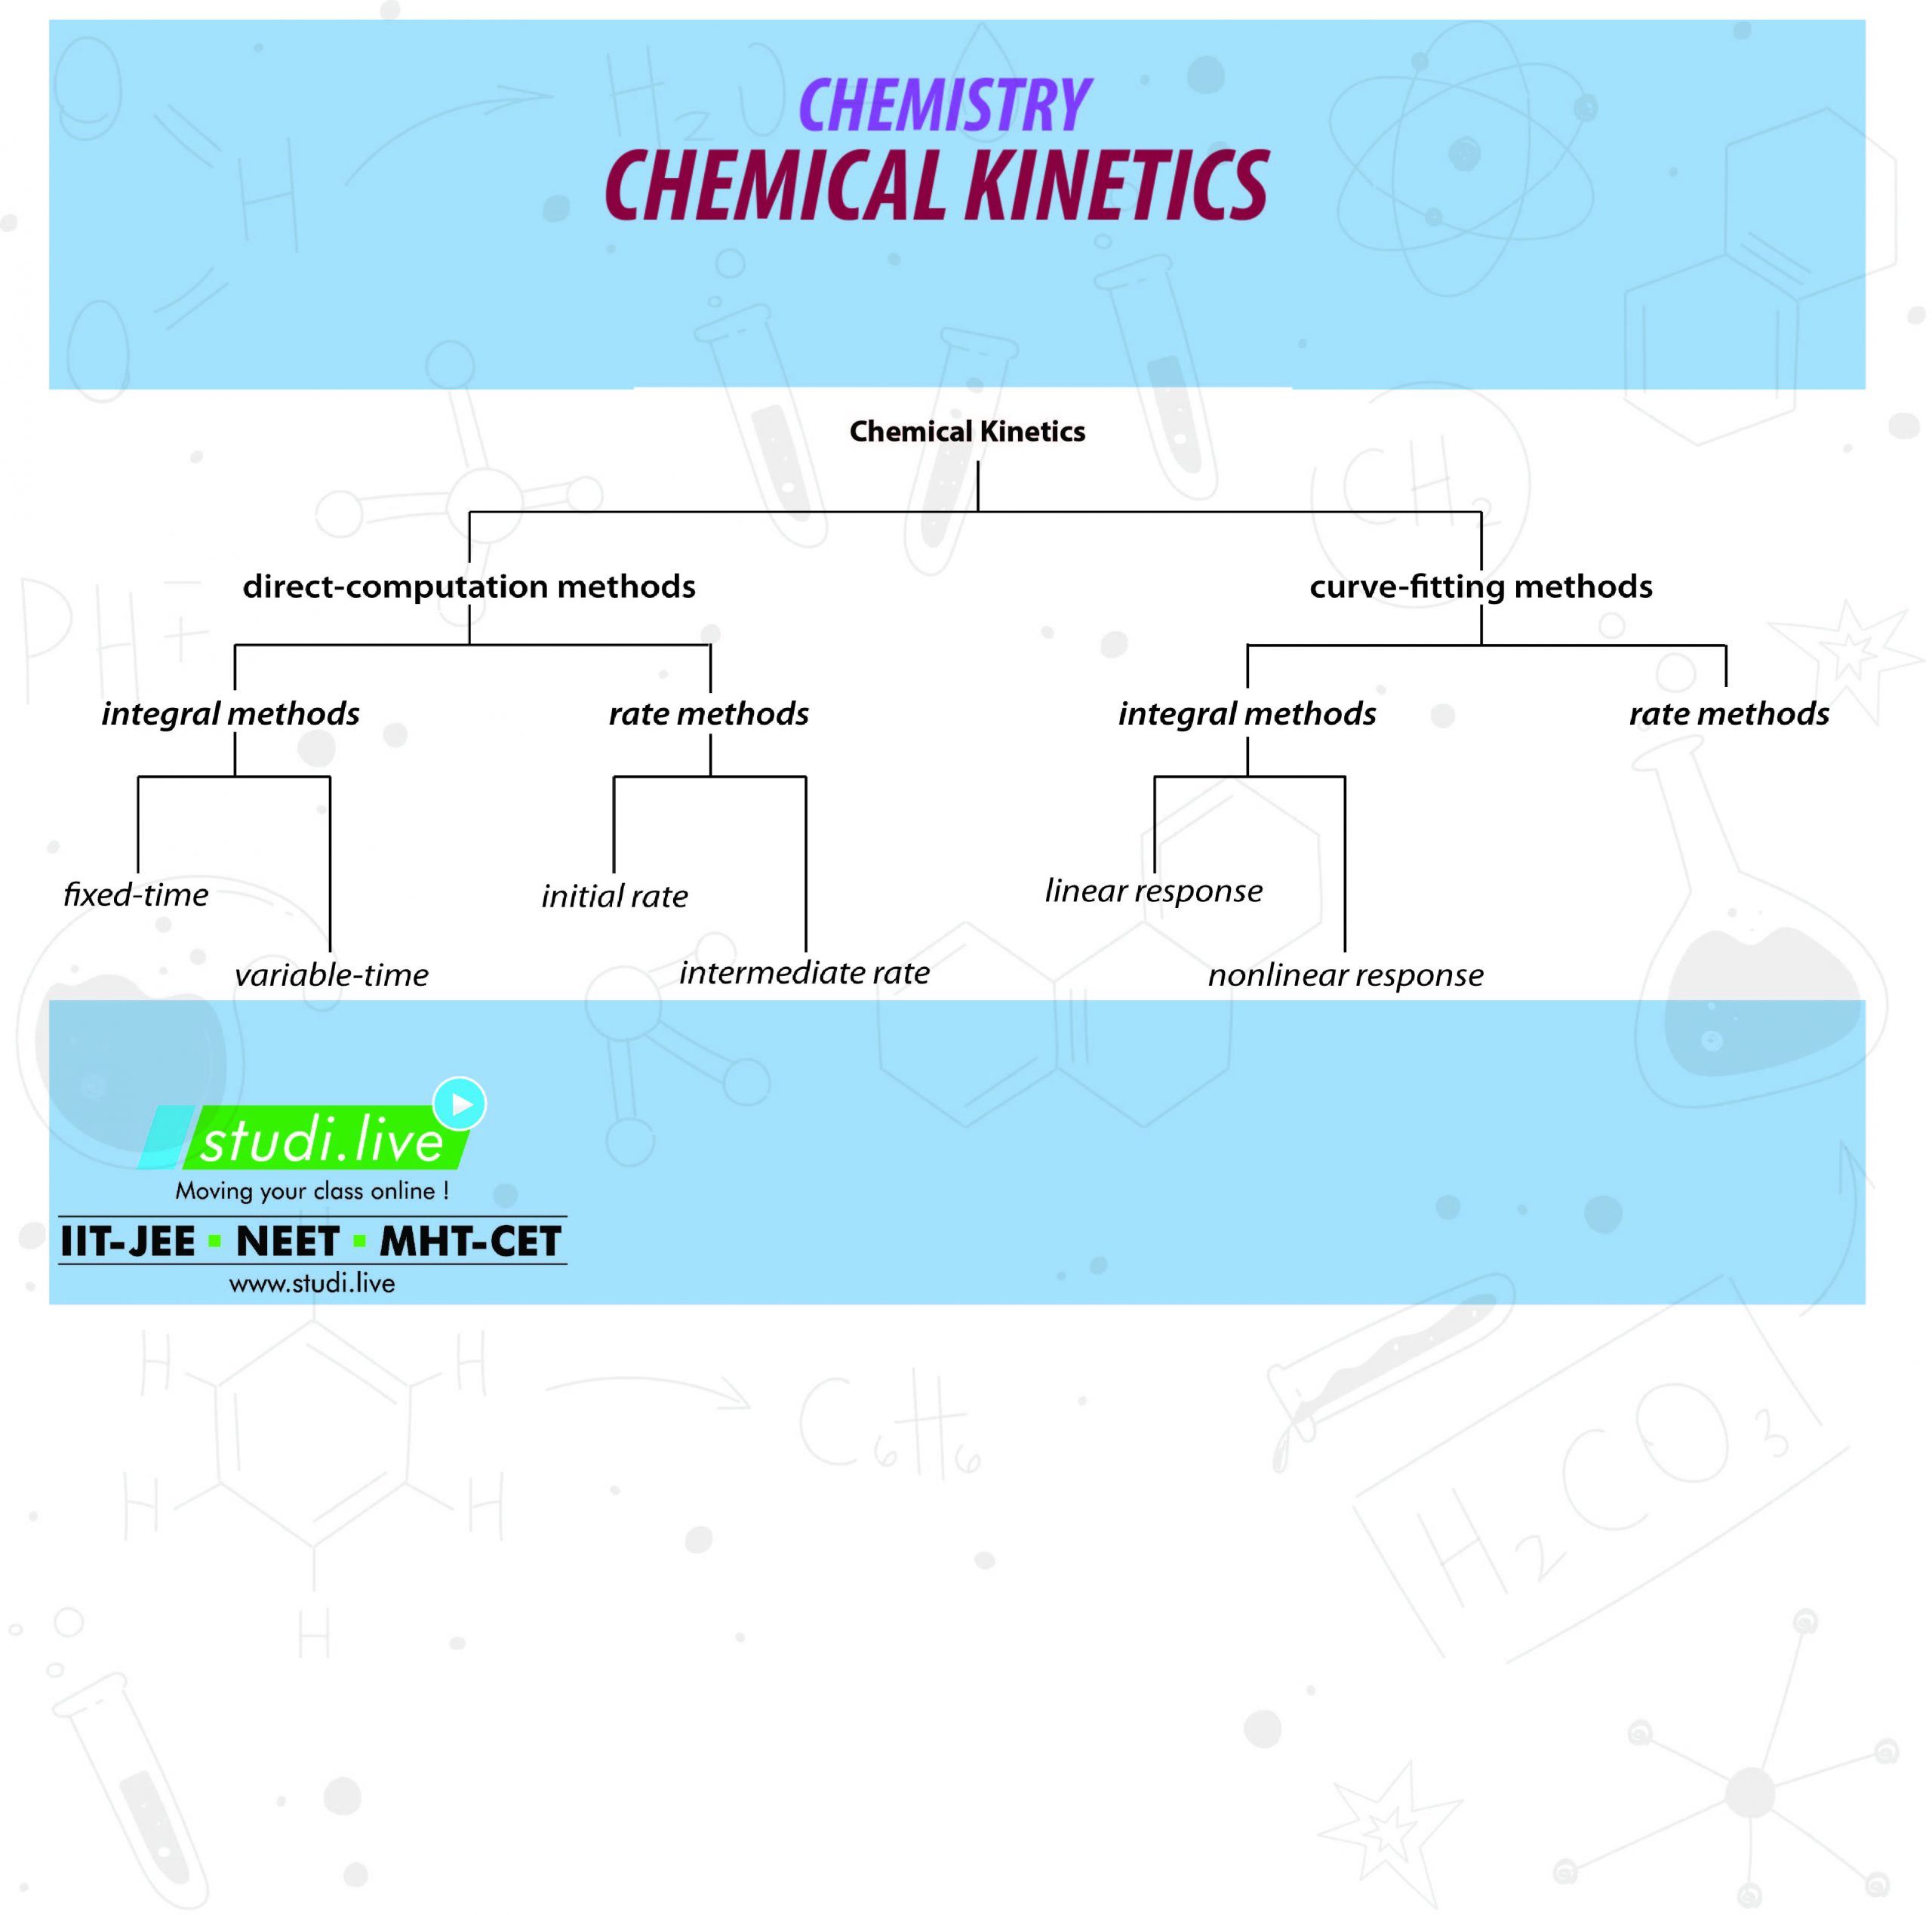 CHEMICAL KINETICS_2